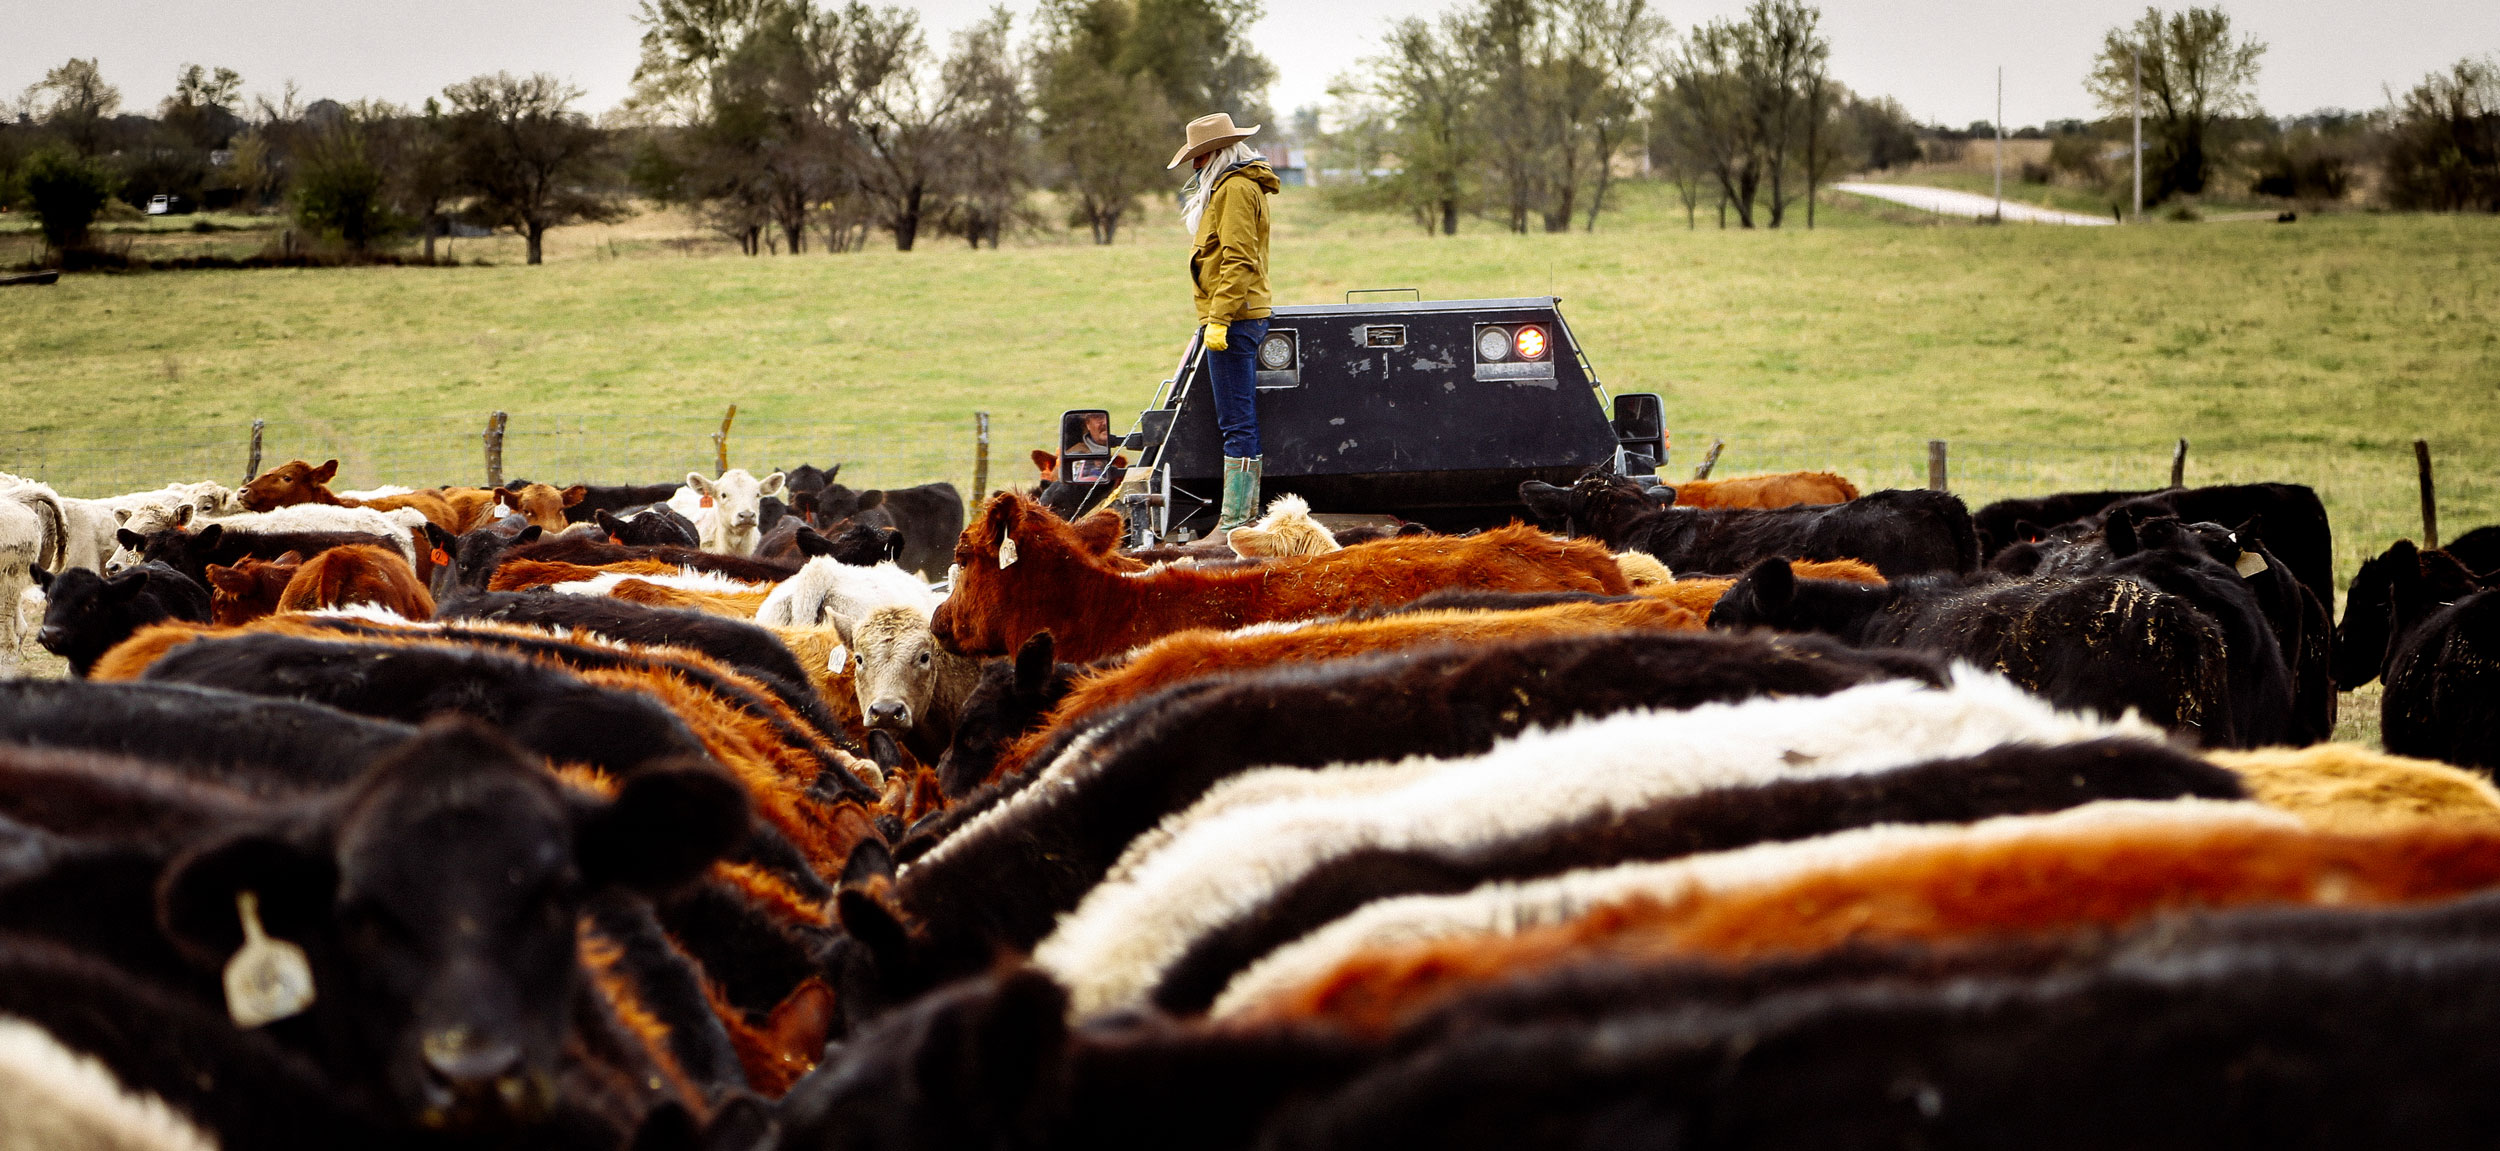 Alex Templeton standing on a farm machine near lots of cows